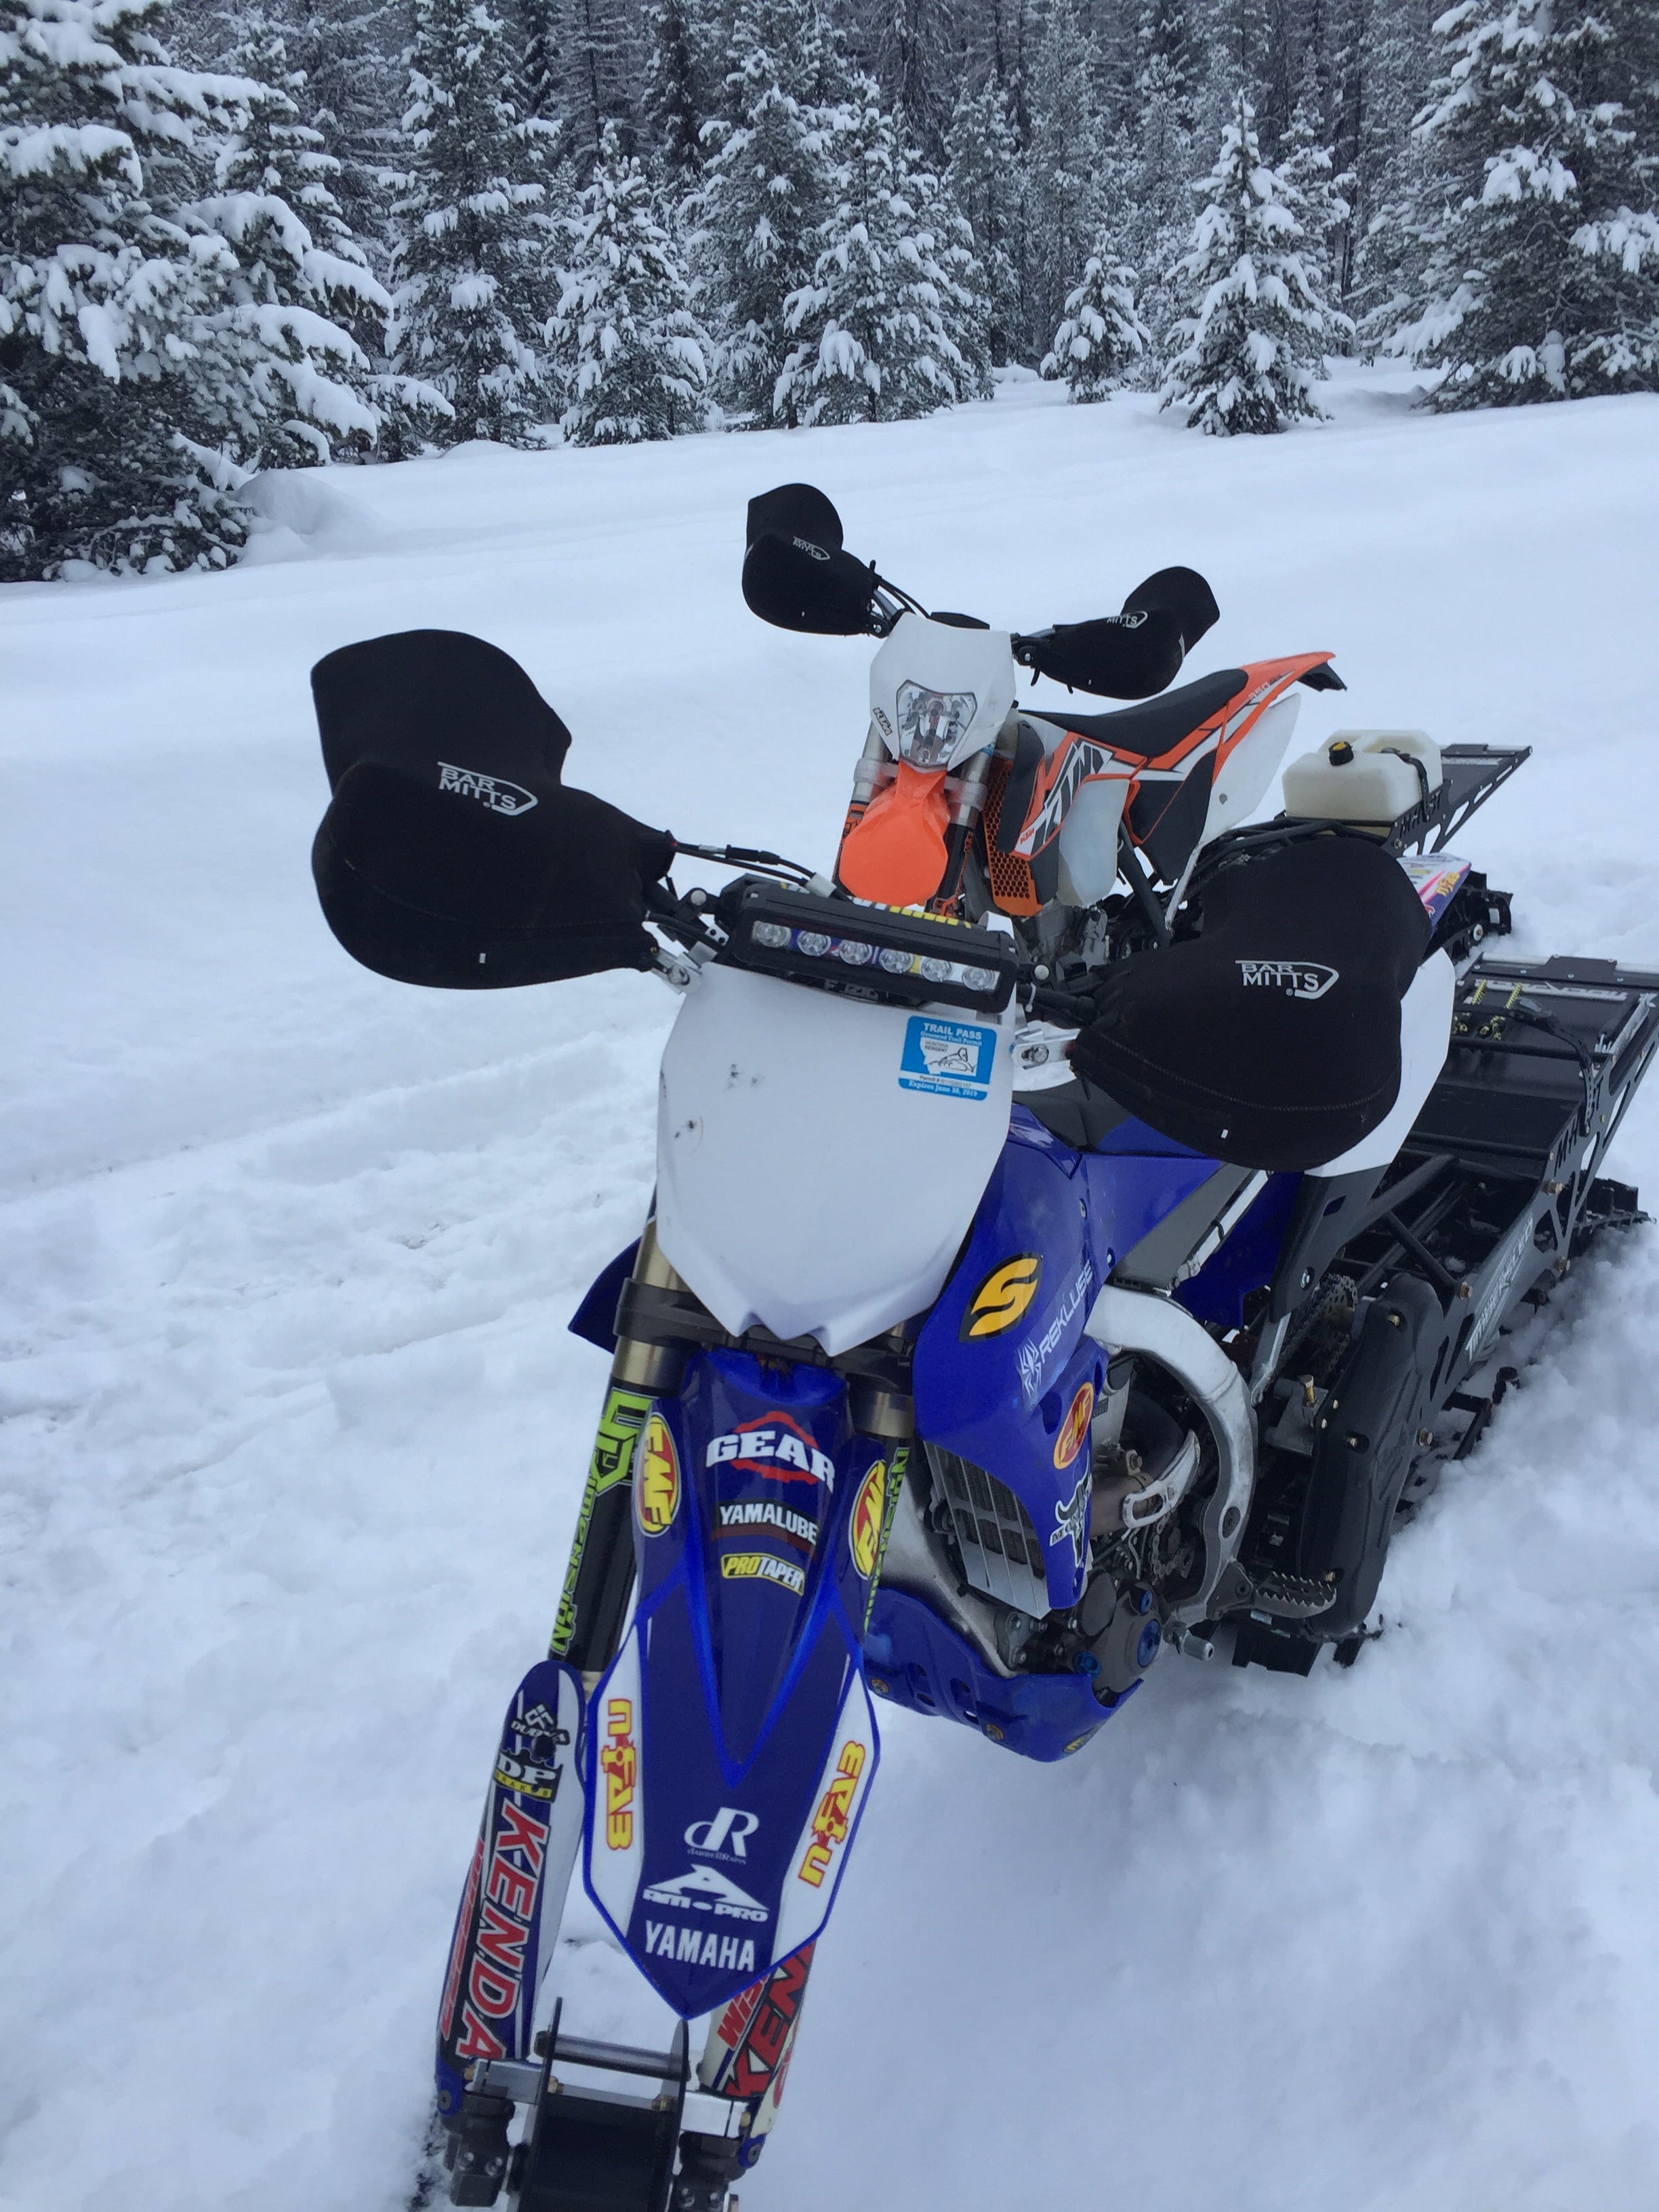 Snowmobile / ATV / Motorcycle / Dirt Bike Mitts – Bar Mitts